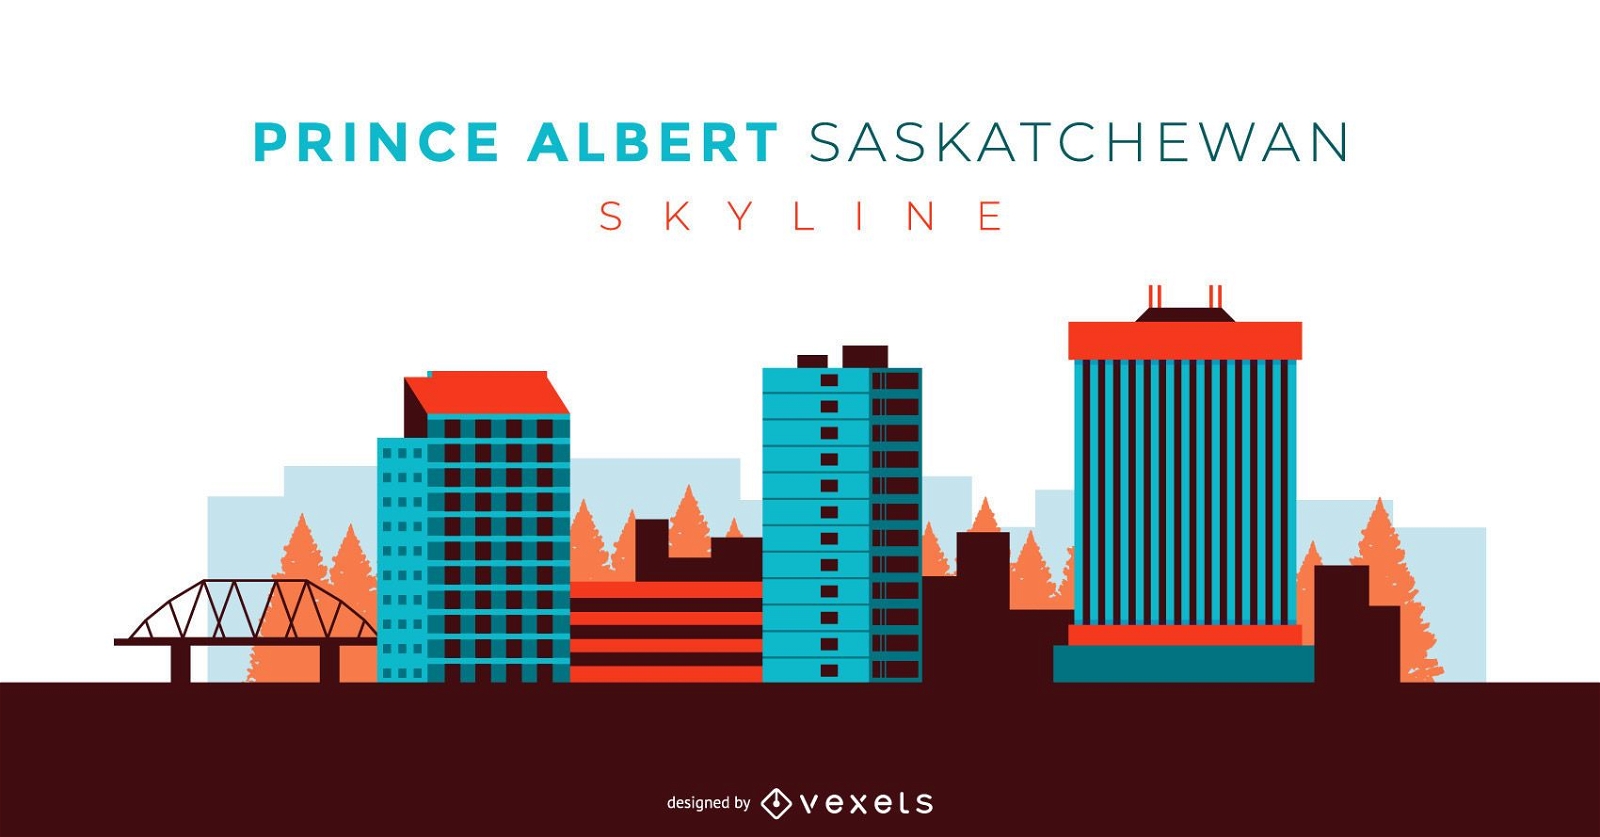 Prince Albert Saskatchewan Skyline design 